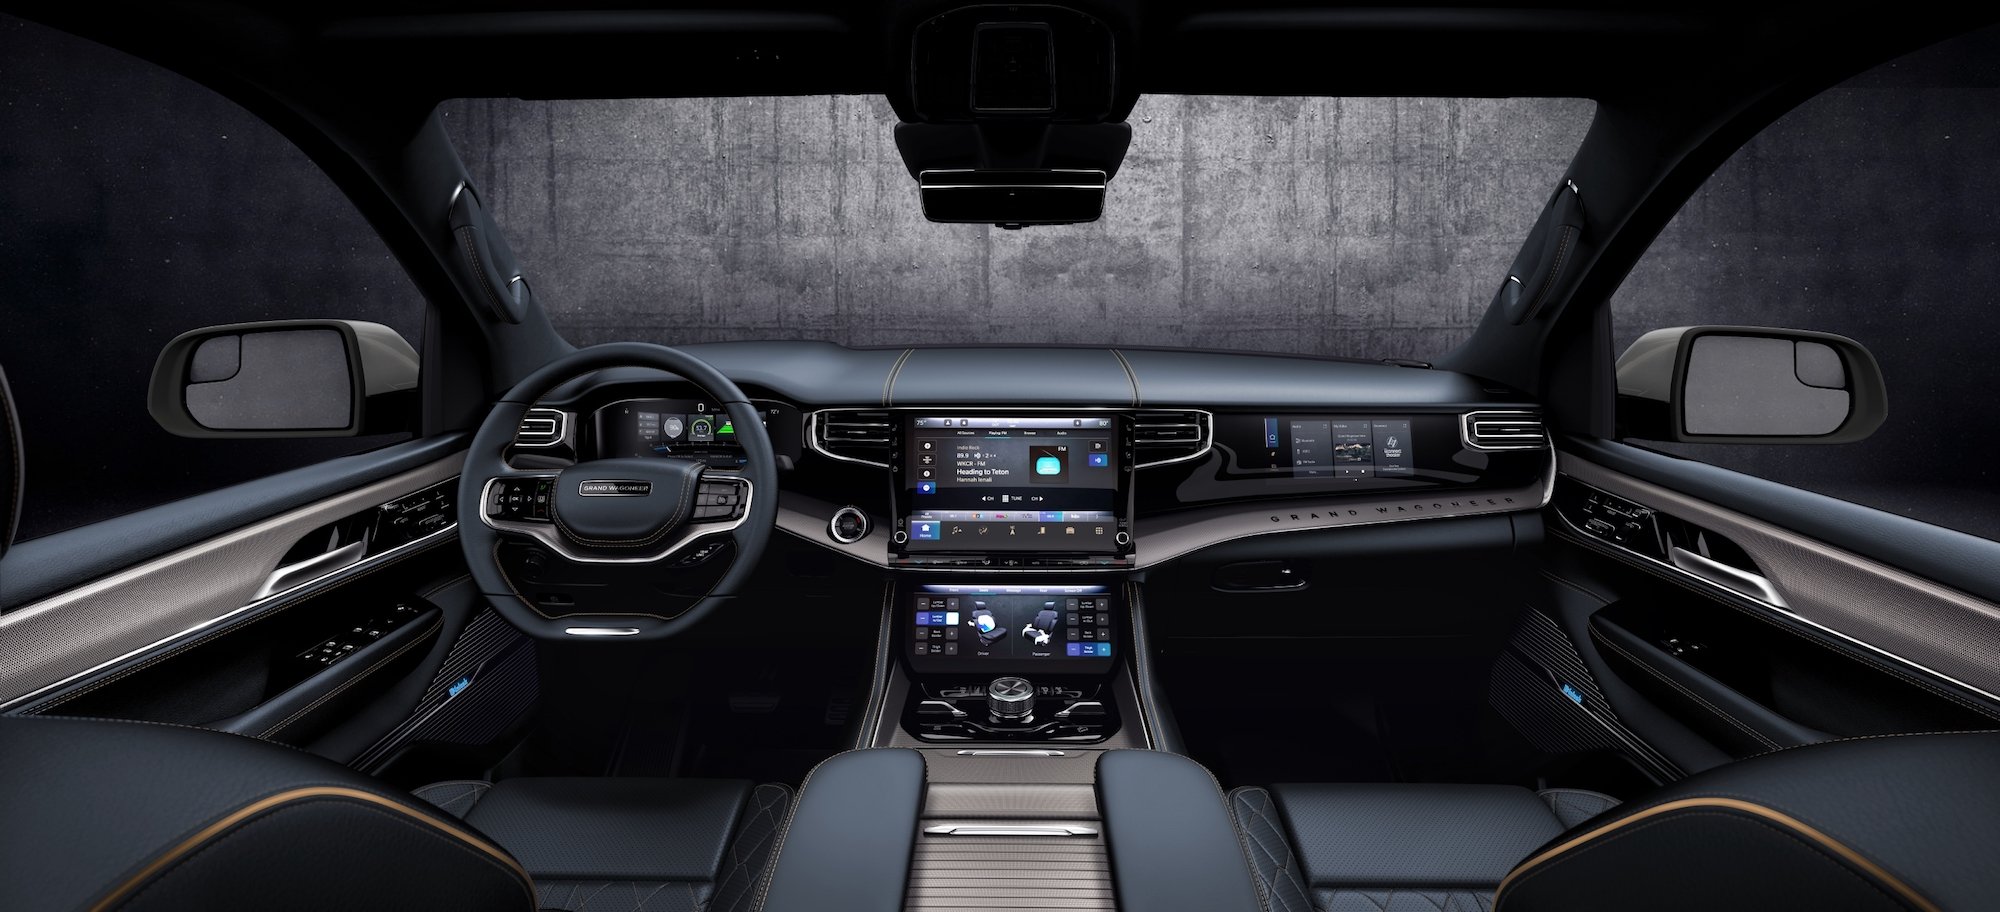 2022 Wards Auto 10 Best Interiors & UX Winners